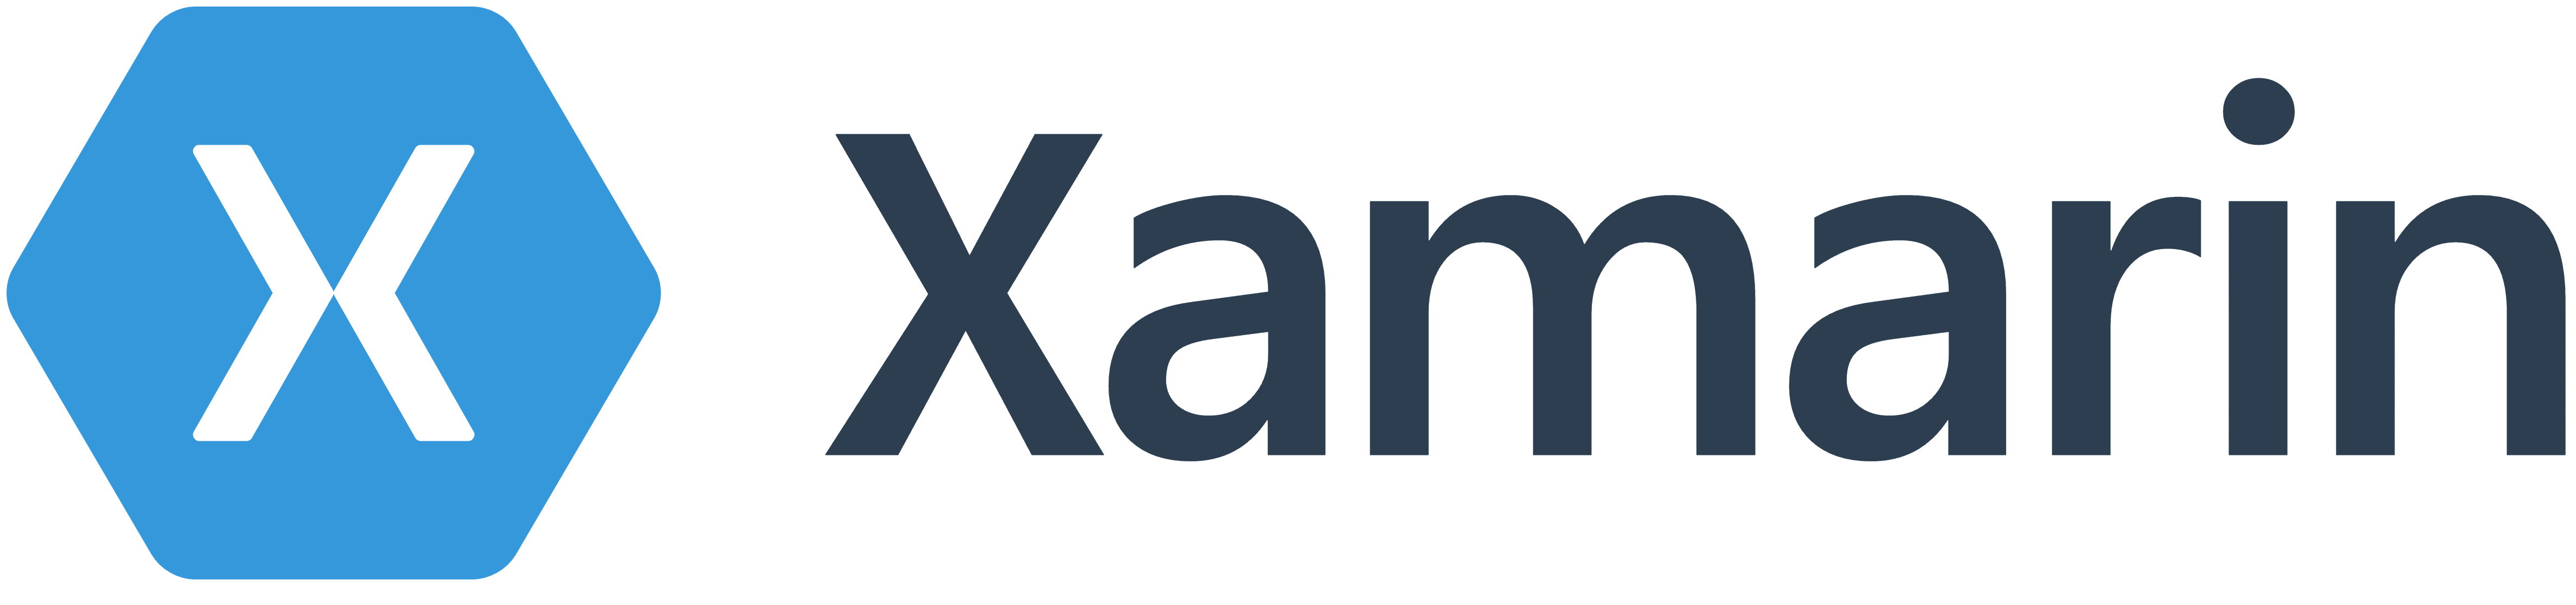 Xamarin logo, logotype